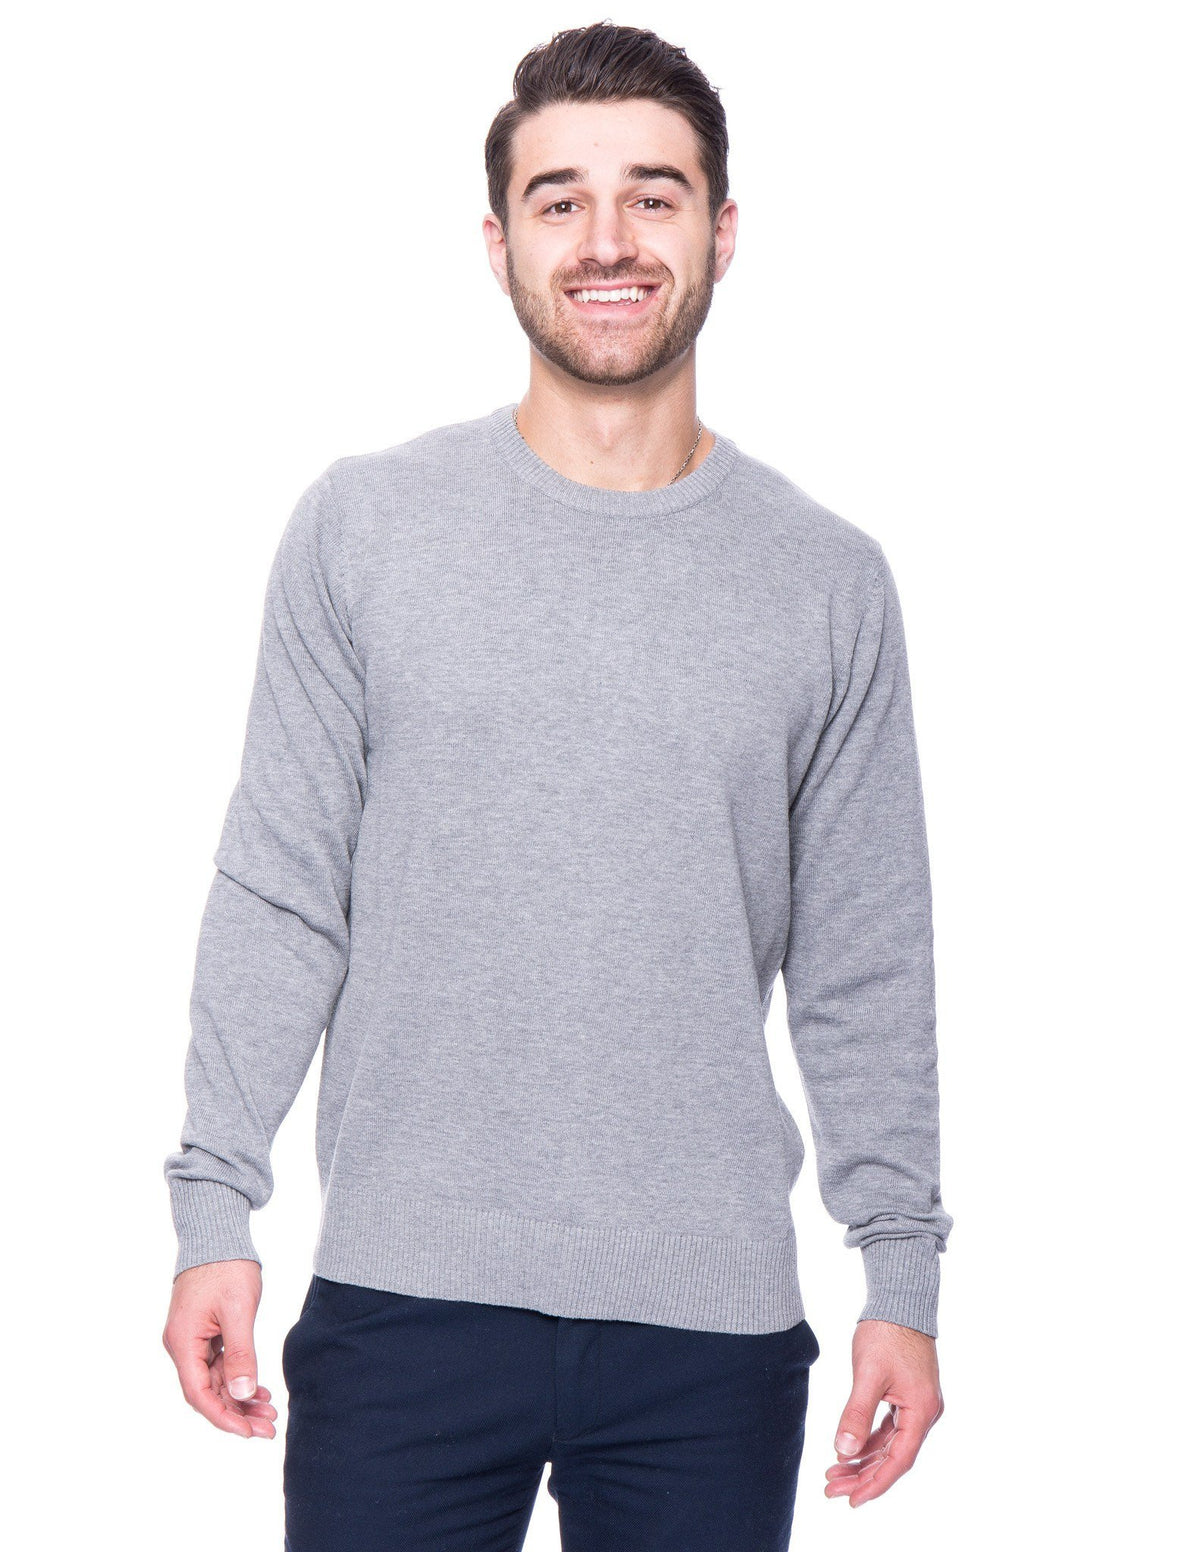 Men's 100% Cotton Crew Neck Sweater - Heather Grey